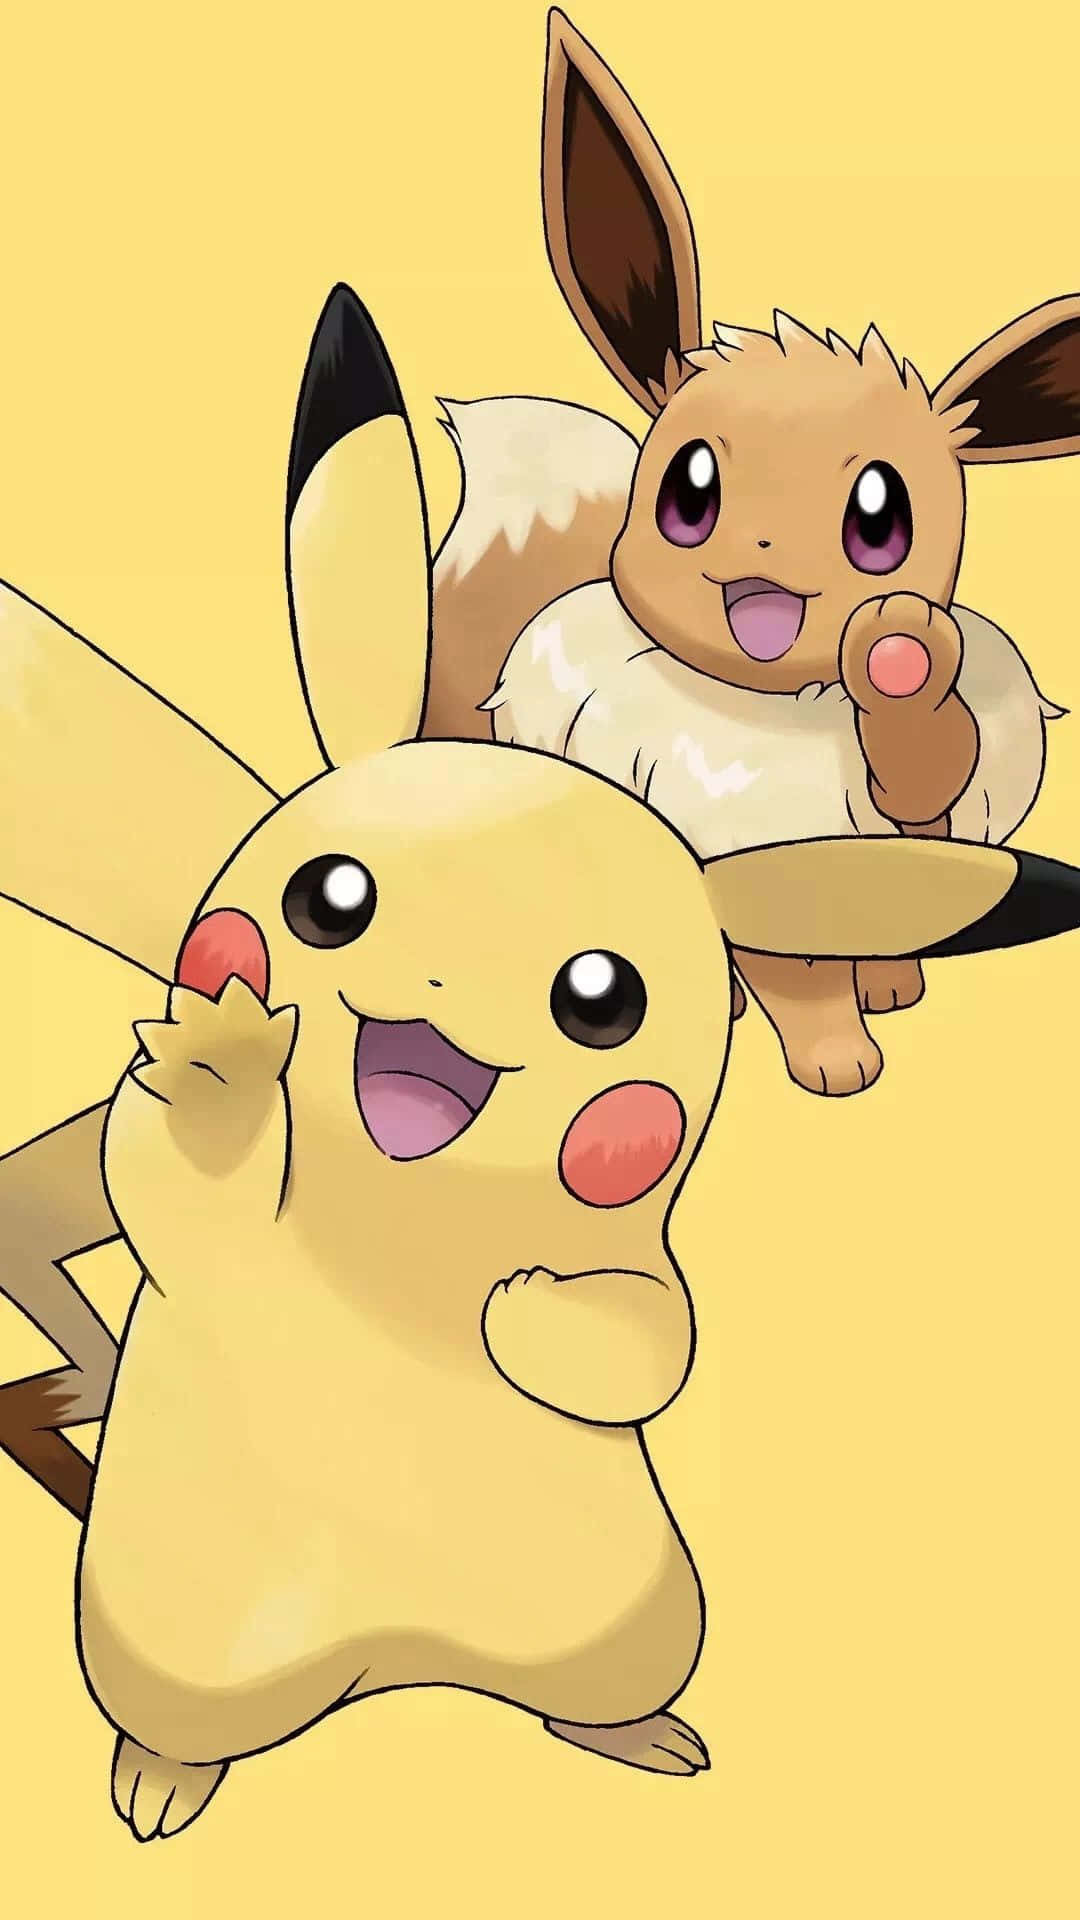 Pokemon Pikachu And Pikachu Wallpaper